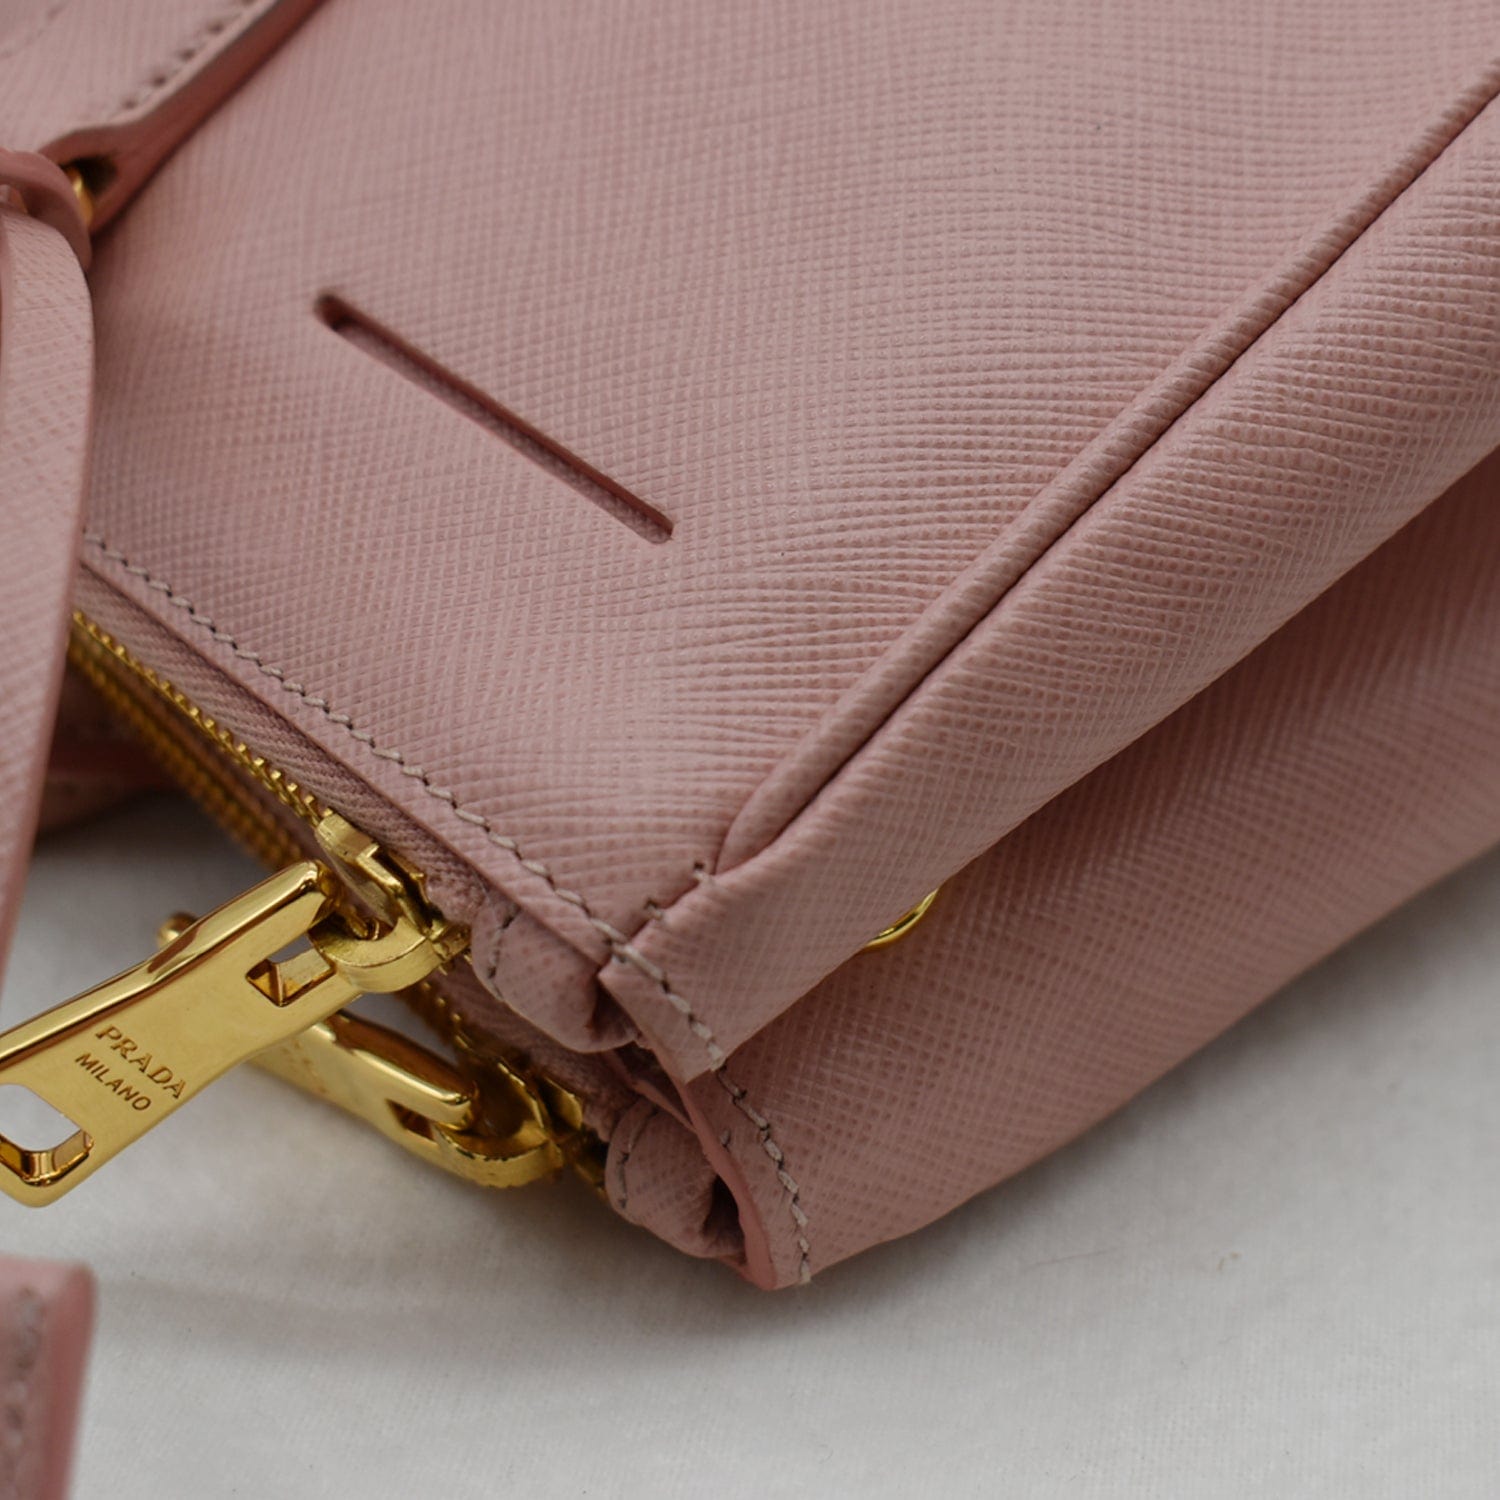 Prada Small Saffiano Leather Wallet, Women, Petal Pink